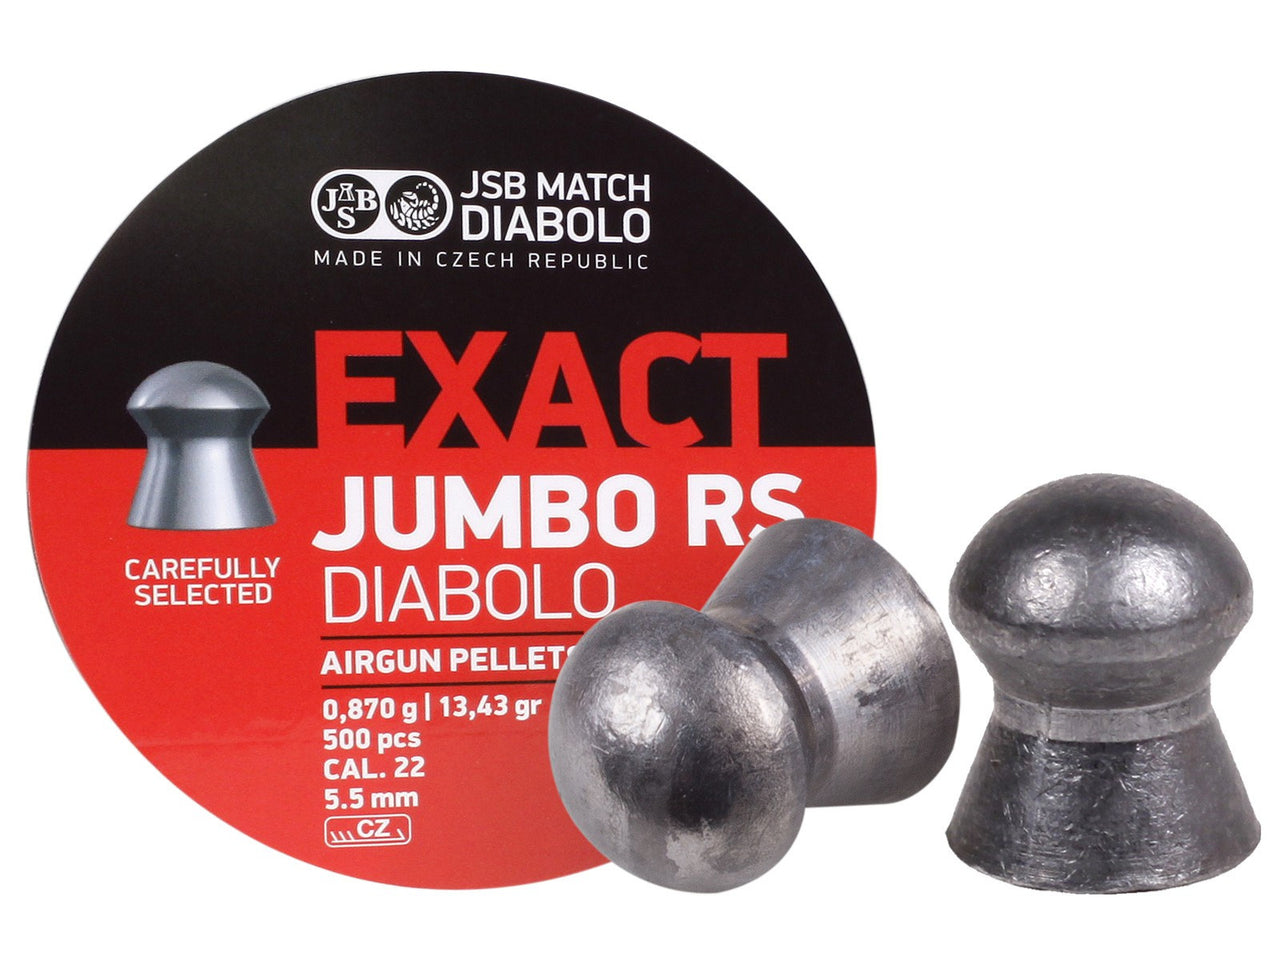 JSB Match Diabolo Exact Jumbo RS | .22 Cal | 13.43 Grains | 500 Ct